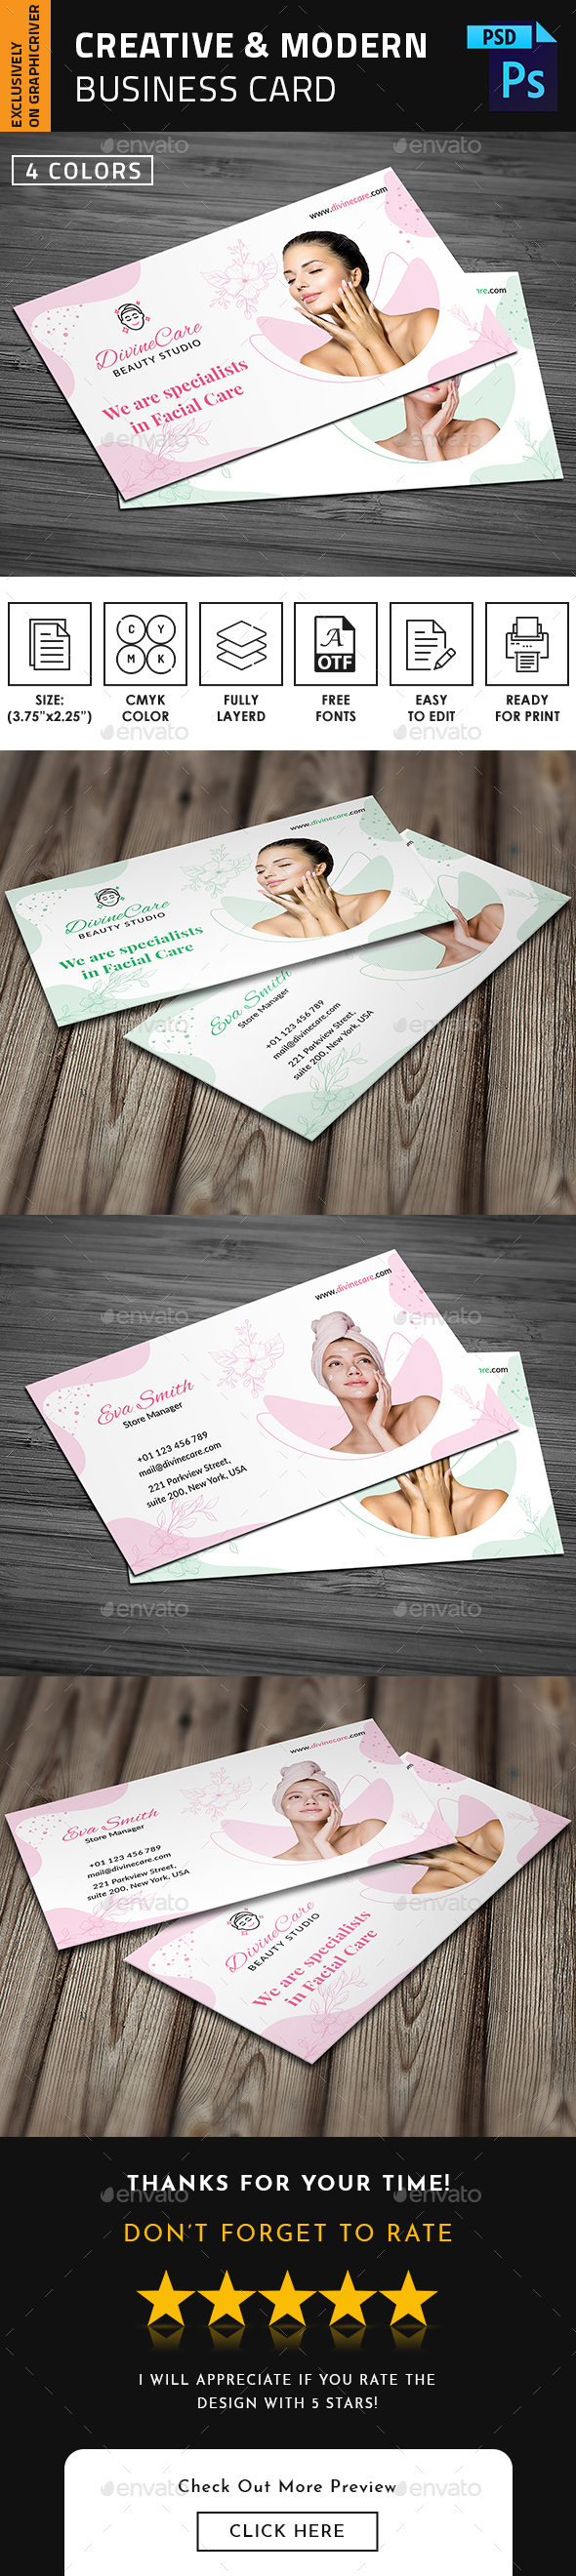 Beauty Studio Business Card